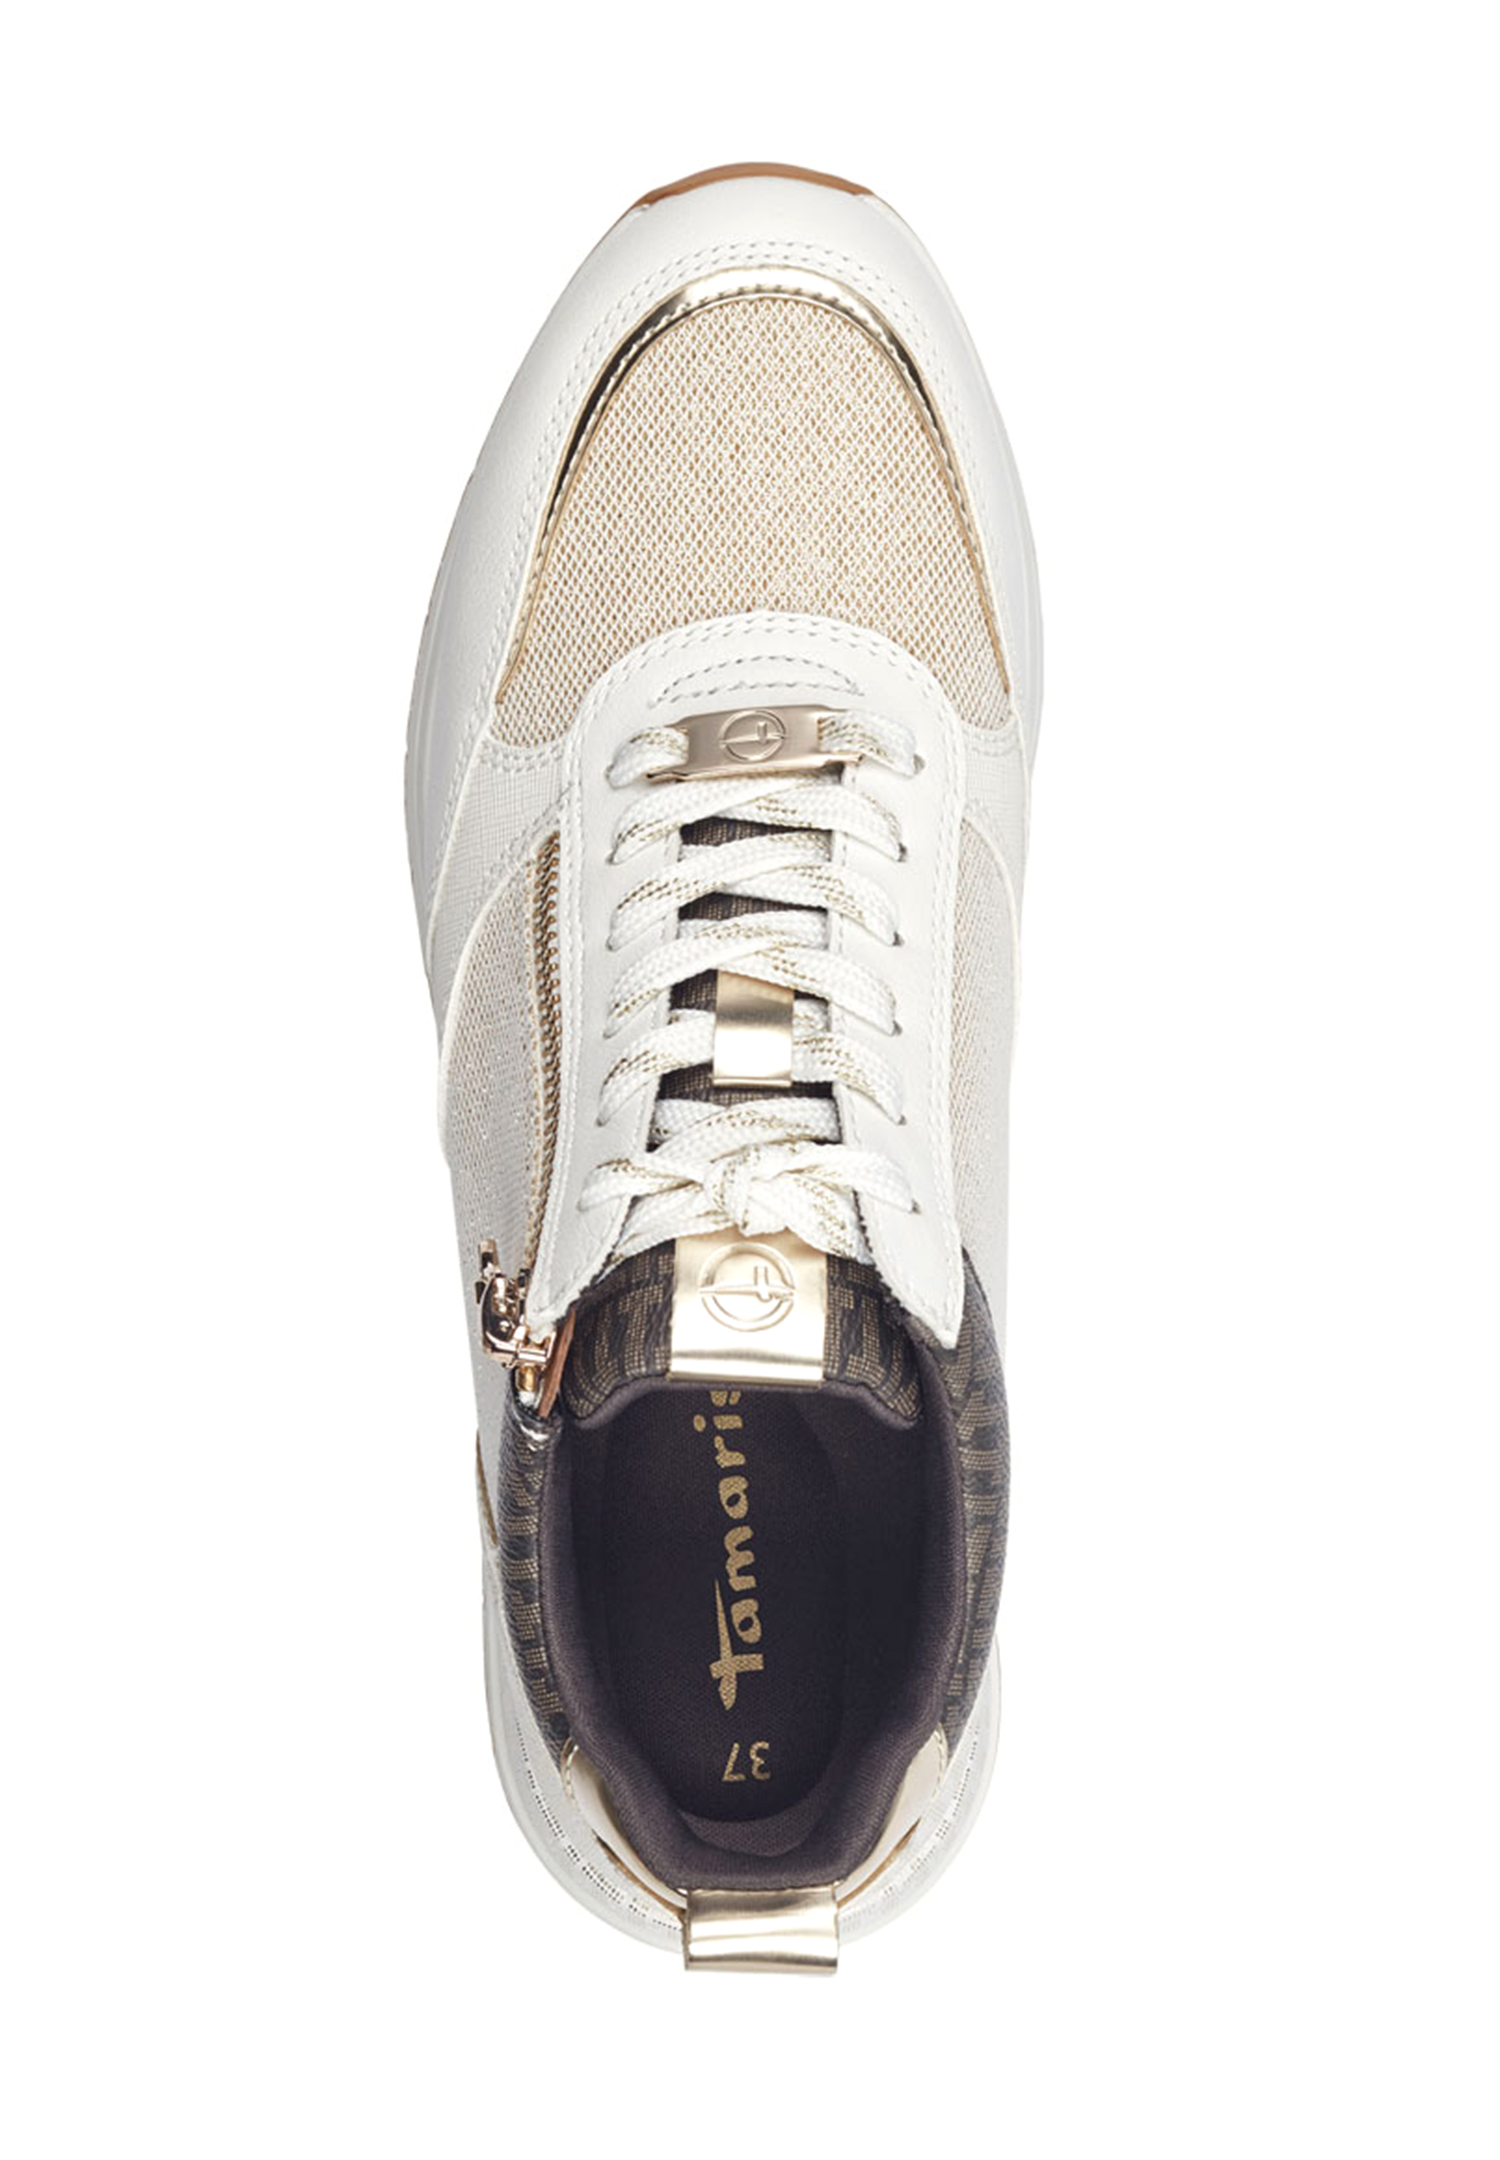 Tamaris Damen Low Top Sneaker Frauen Schuhe Vegan M2373241 weiß/braun/gold